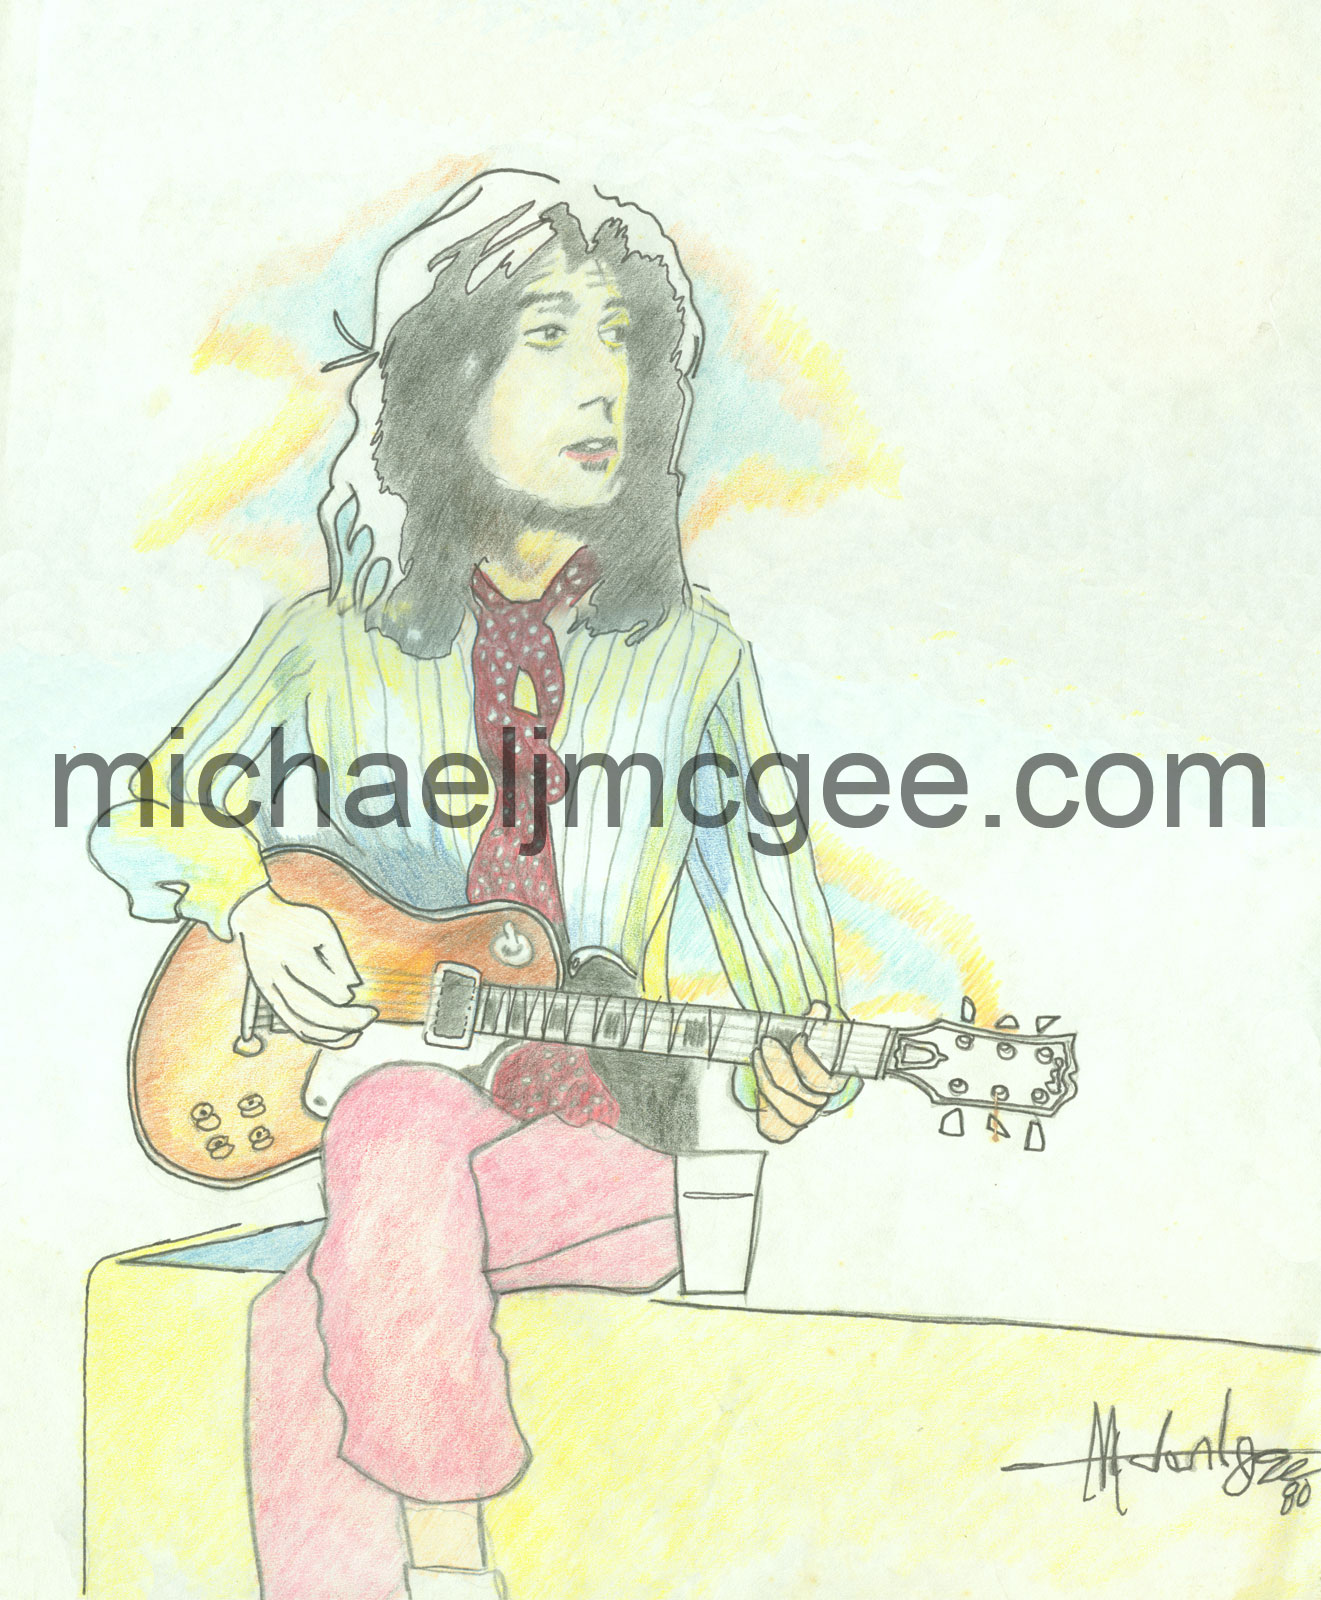 Jimmy Page / MJM Artworks / michaeljmcgee.com